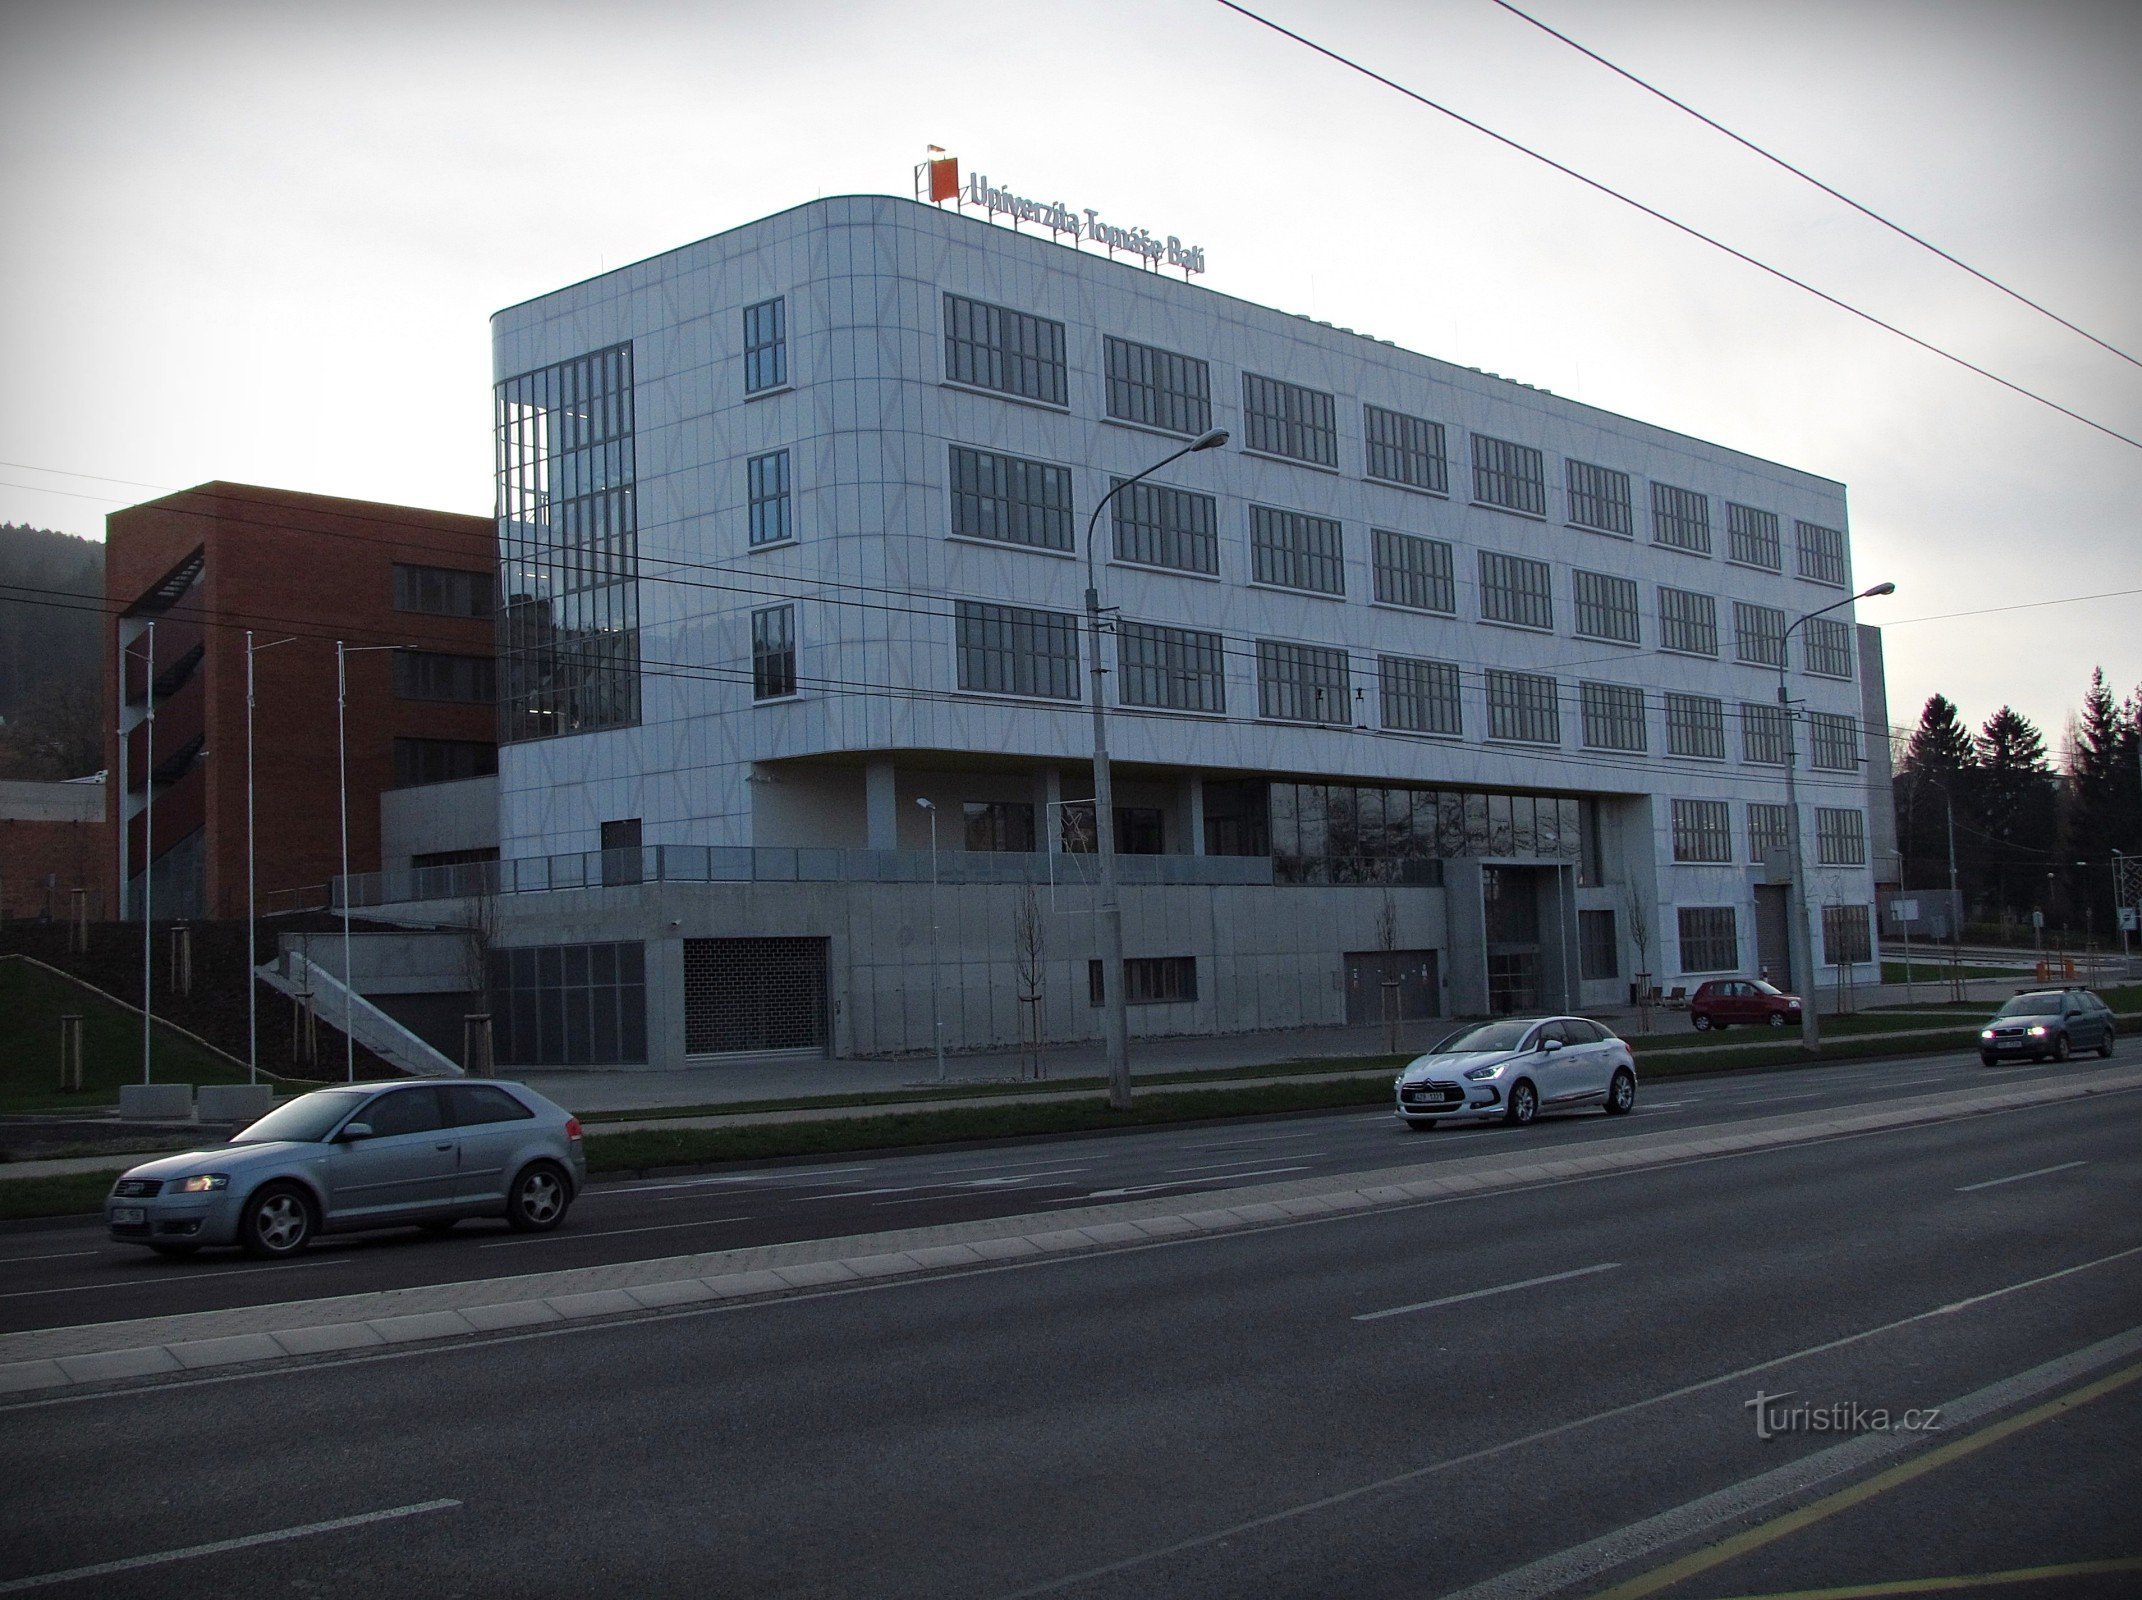 Zlín - Center for polymersystemer